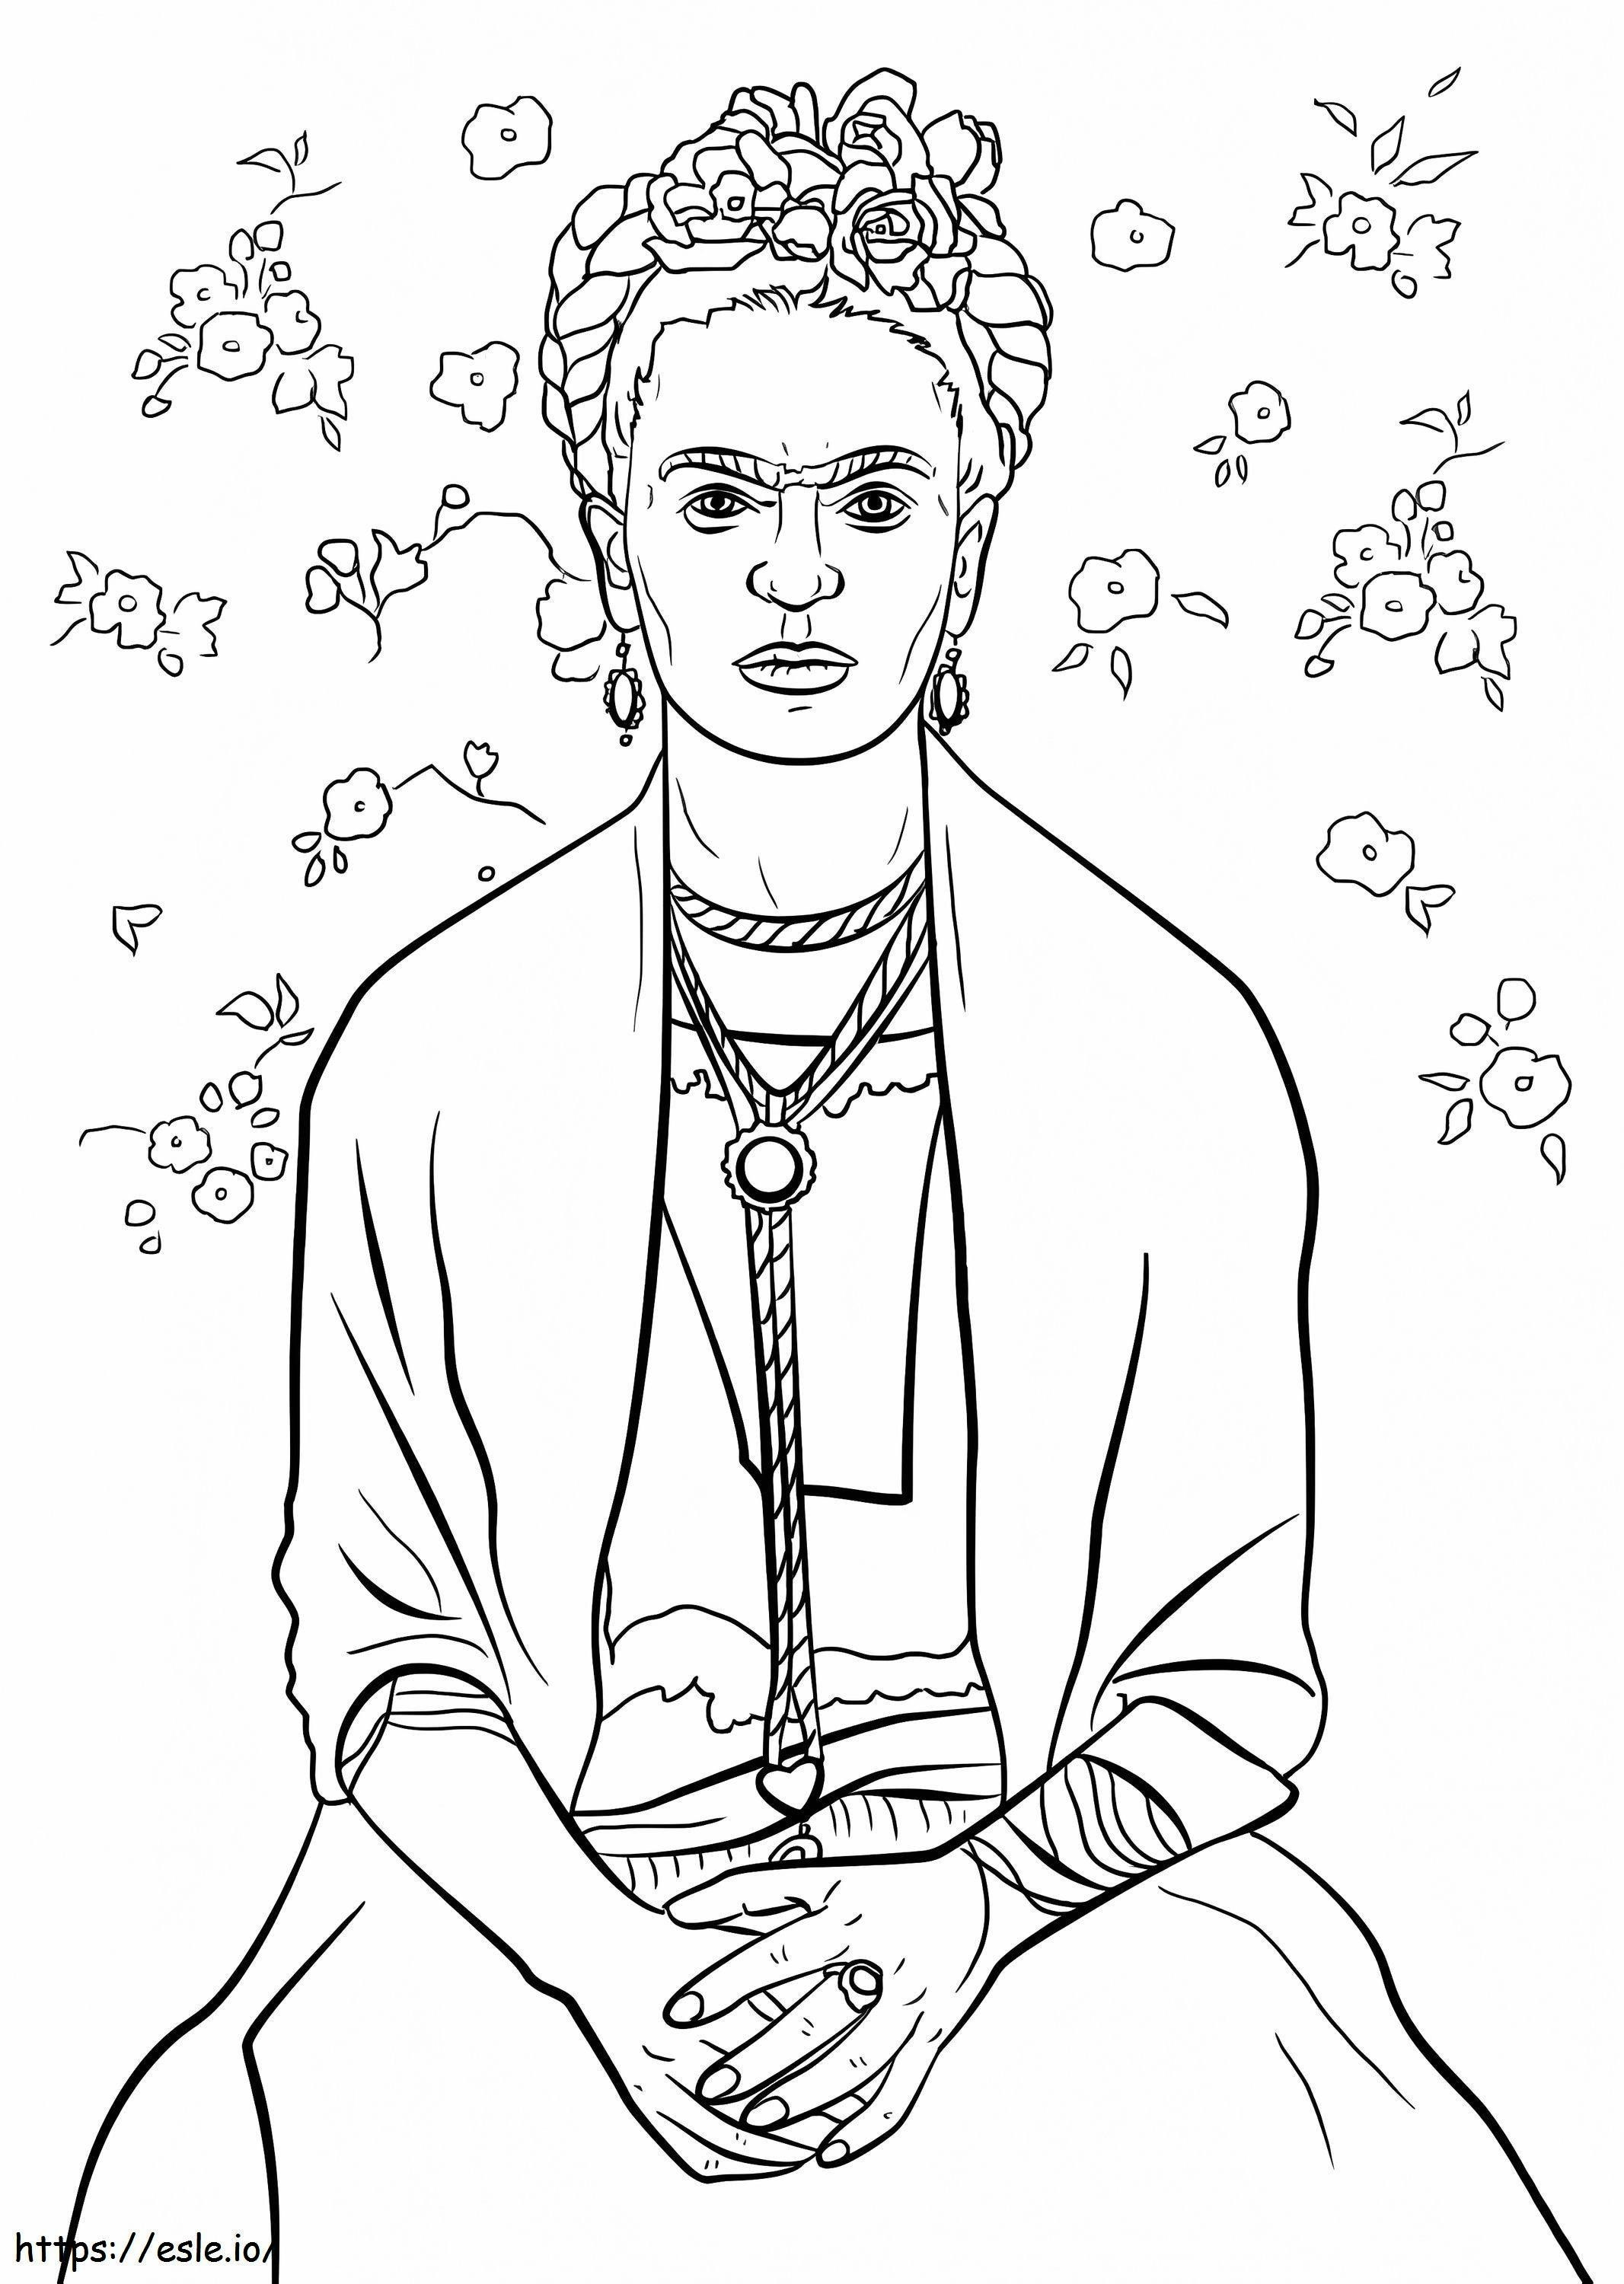 Frida Kahlo 1 coloring page